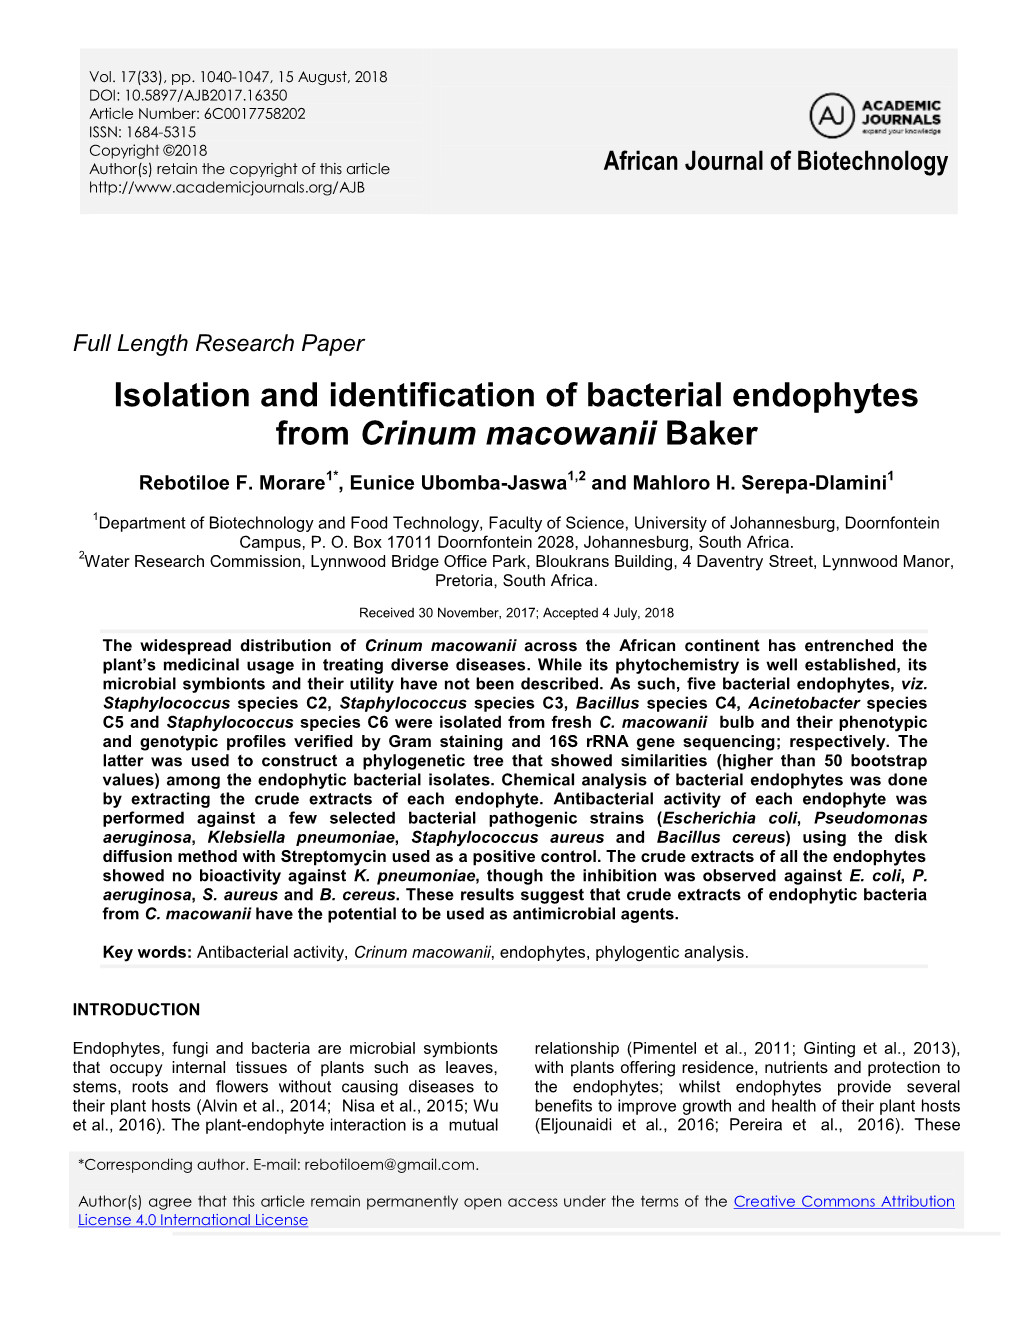 Isolation and Identification of Bacterial Endophytes from Crinum Macowanii Baker